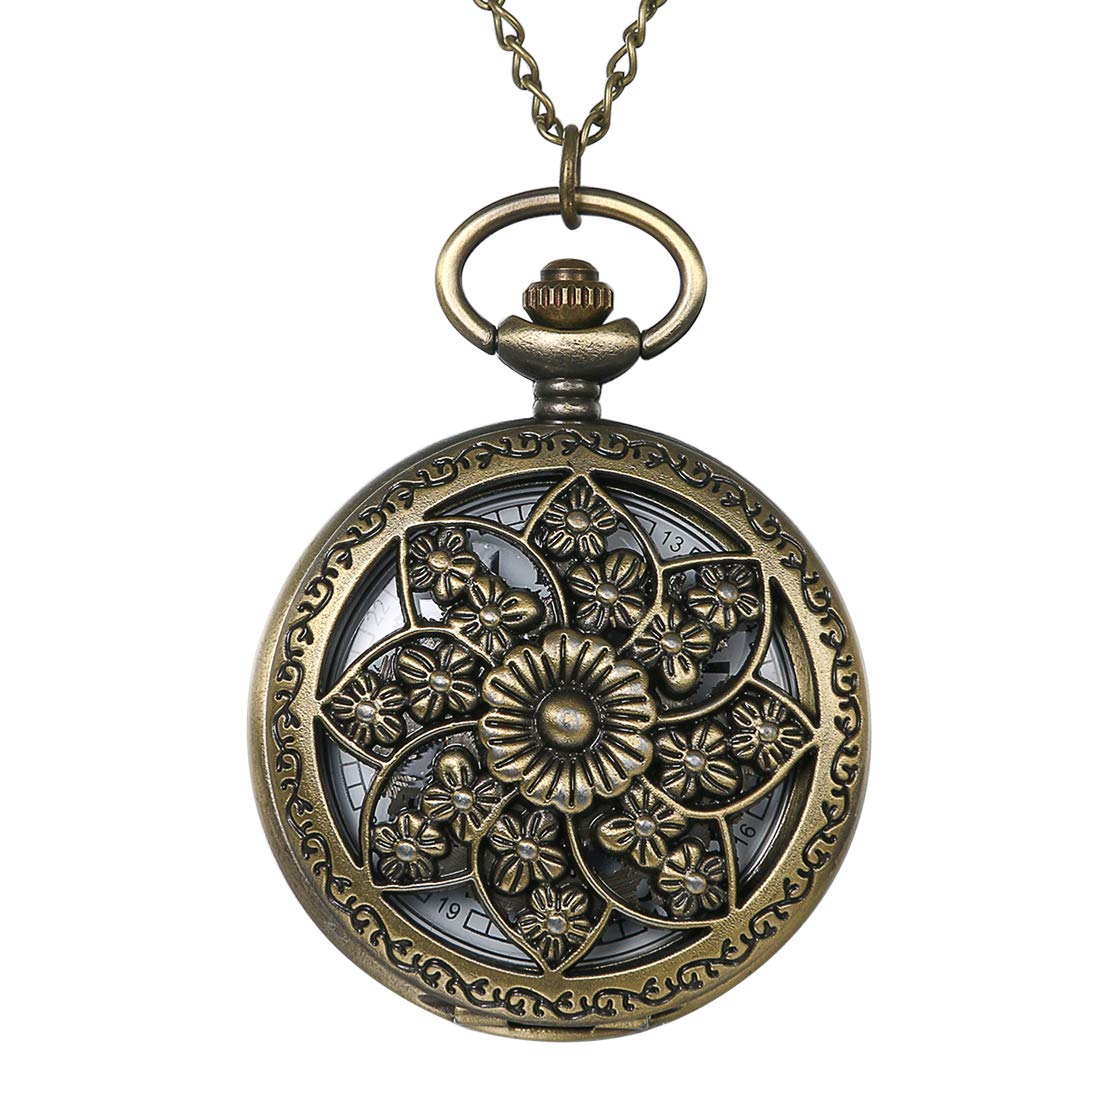 Avaner Antique Bronze Retro Hollow Rose Flowers Openwork Quartz Pocket Watch for Women Girls